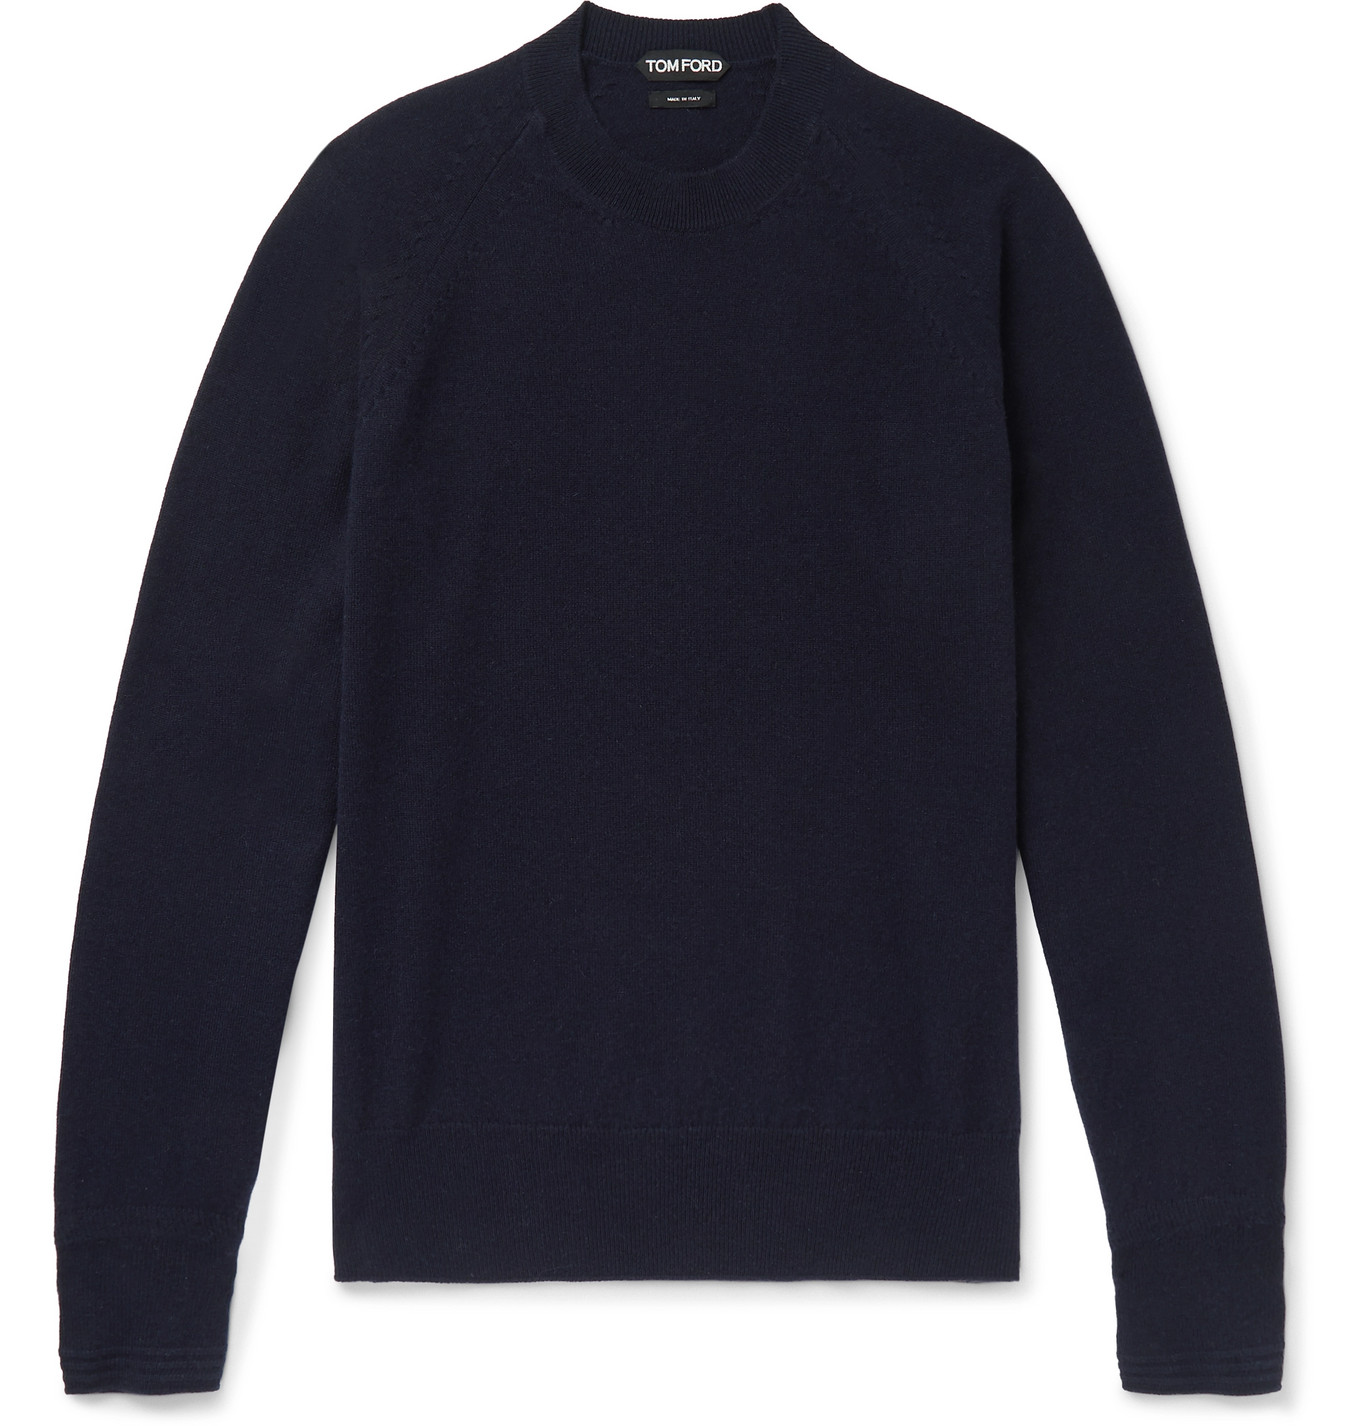 TOM FORD - Cashmere Sweater - Men - Blue | The Fashionisto